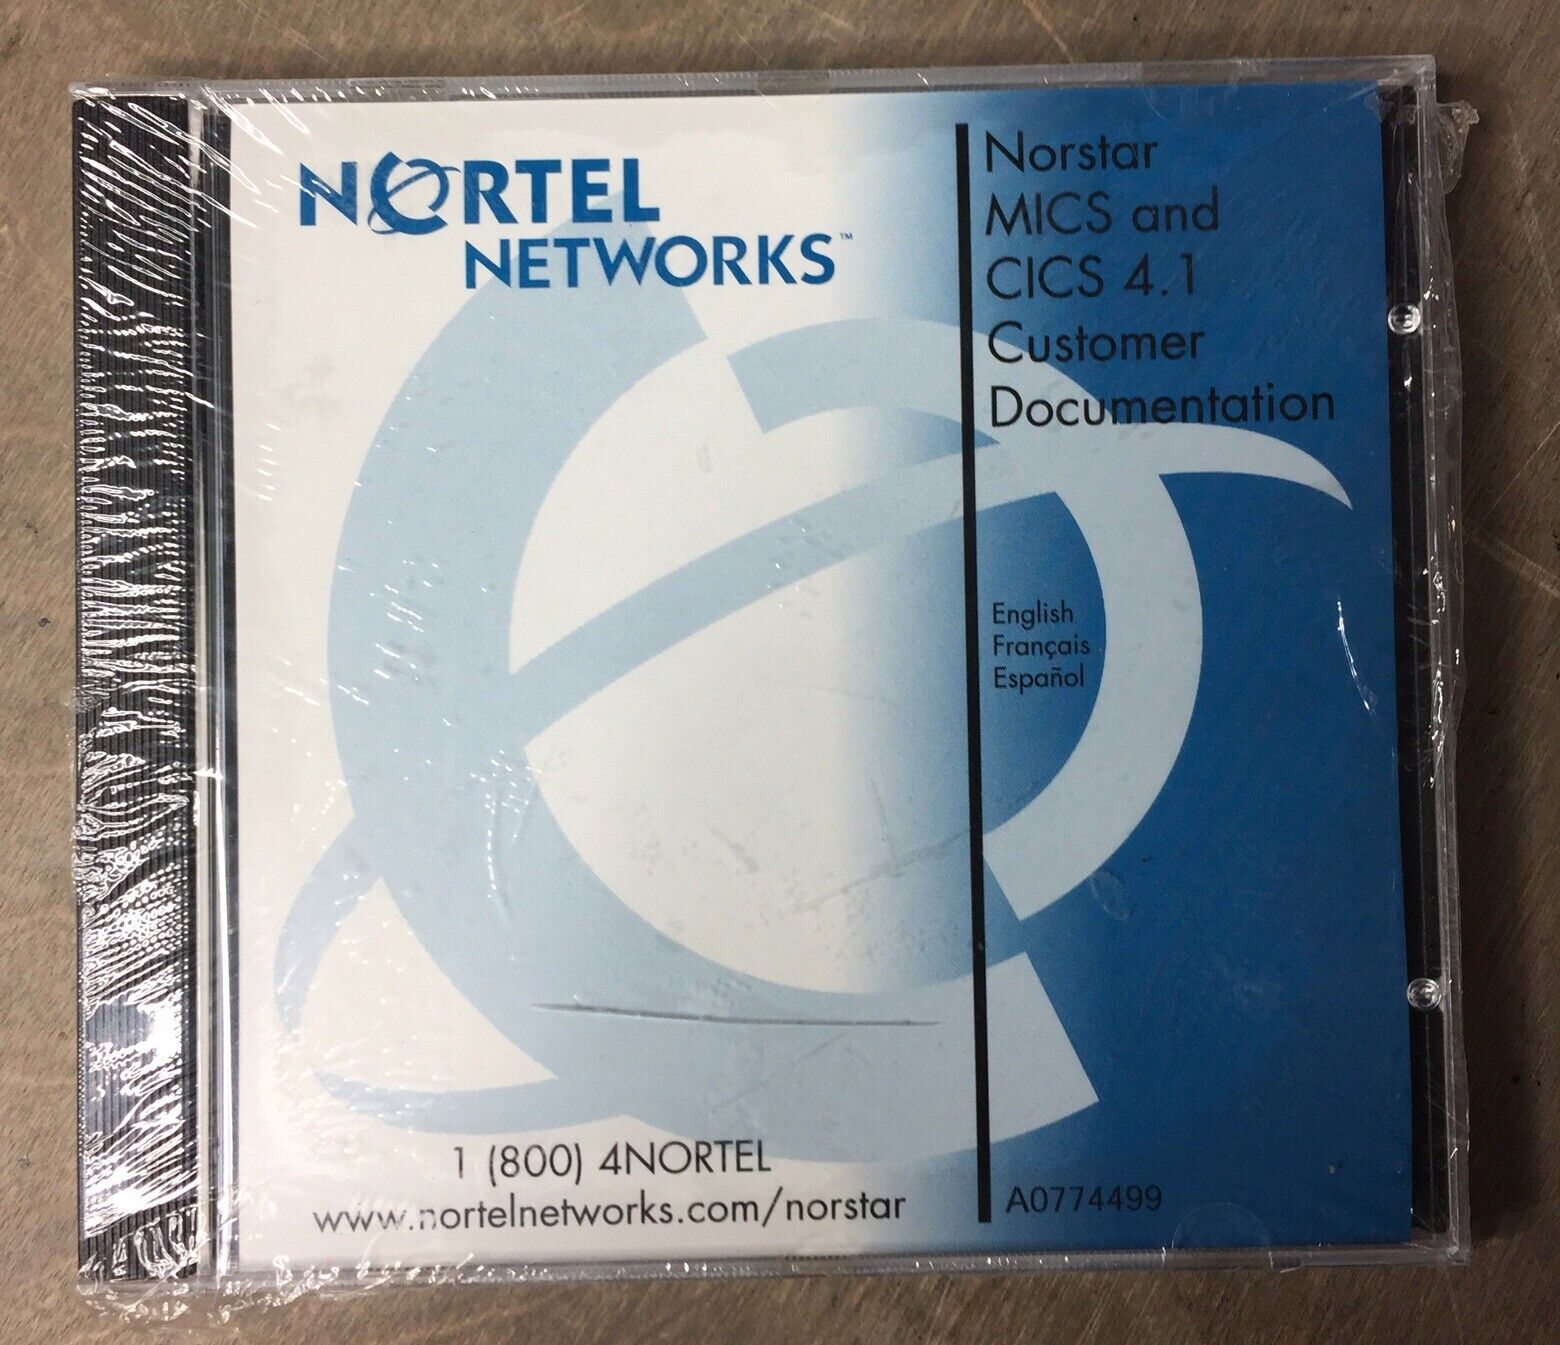 Nortel Networks Norstar MICS & ICS 4.1 New Old Stock CD - Sealed